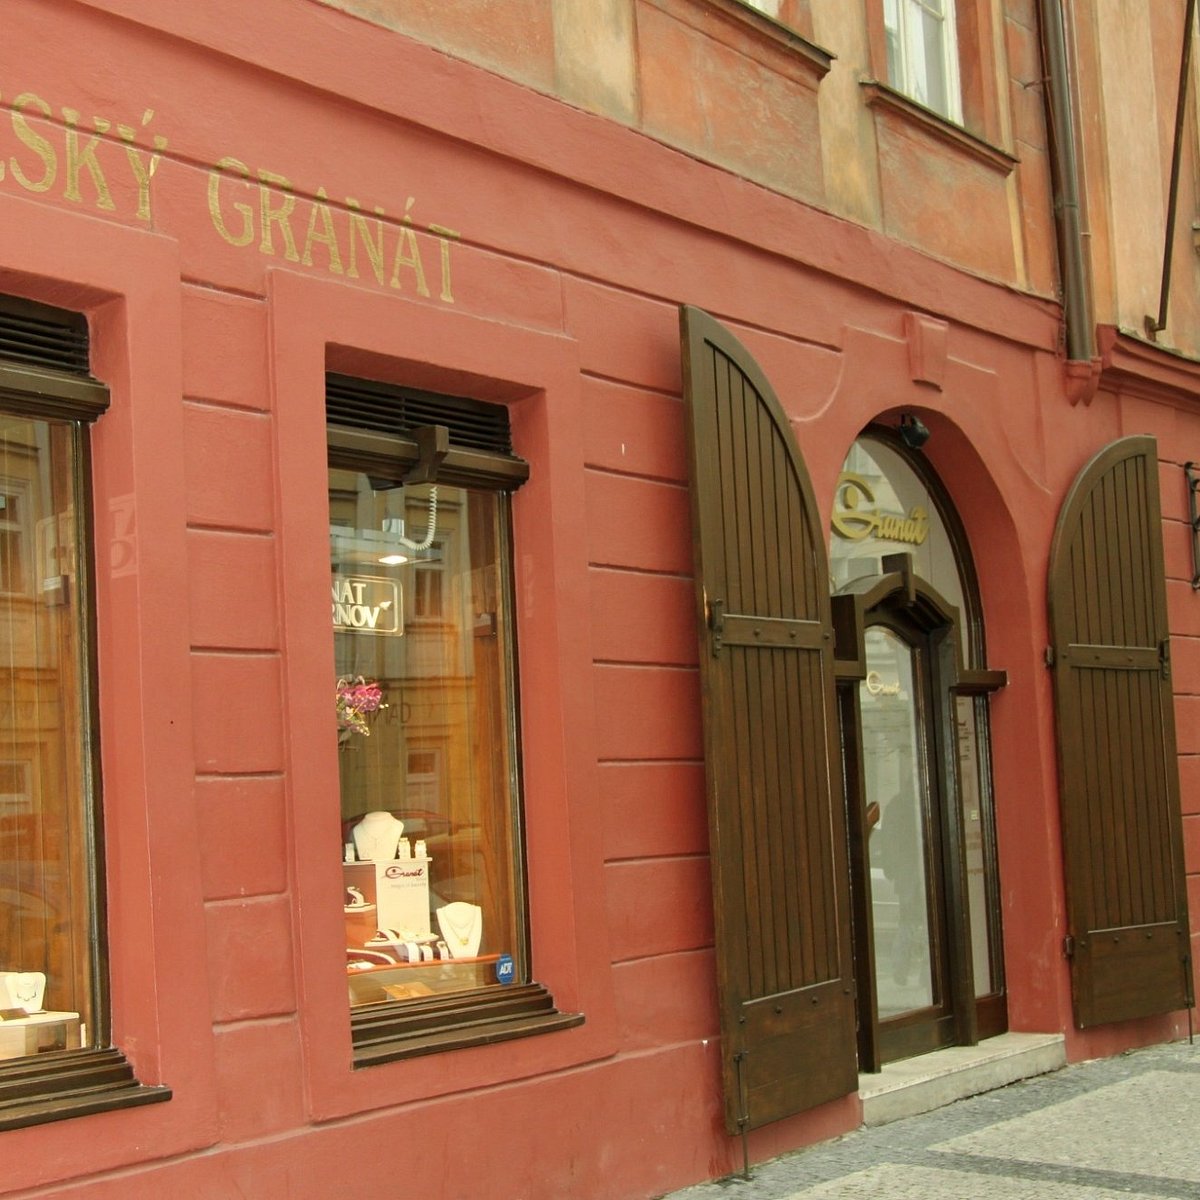 Granat Turnov (Prague) - All You Need to You